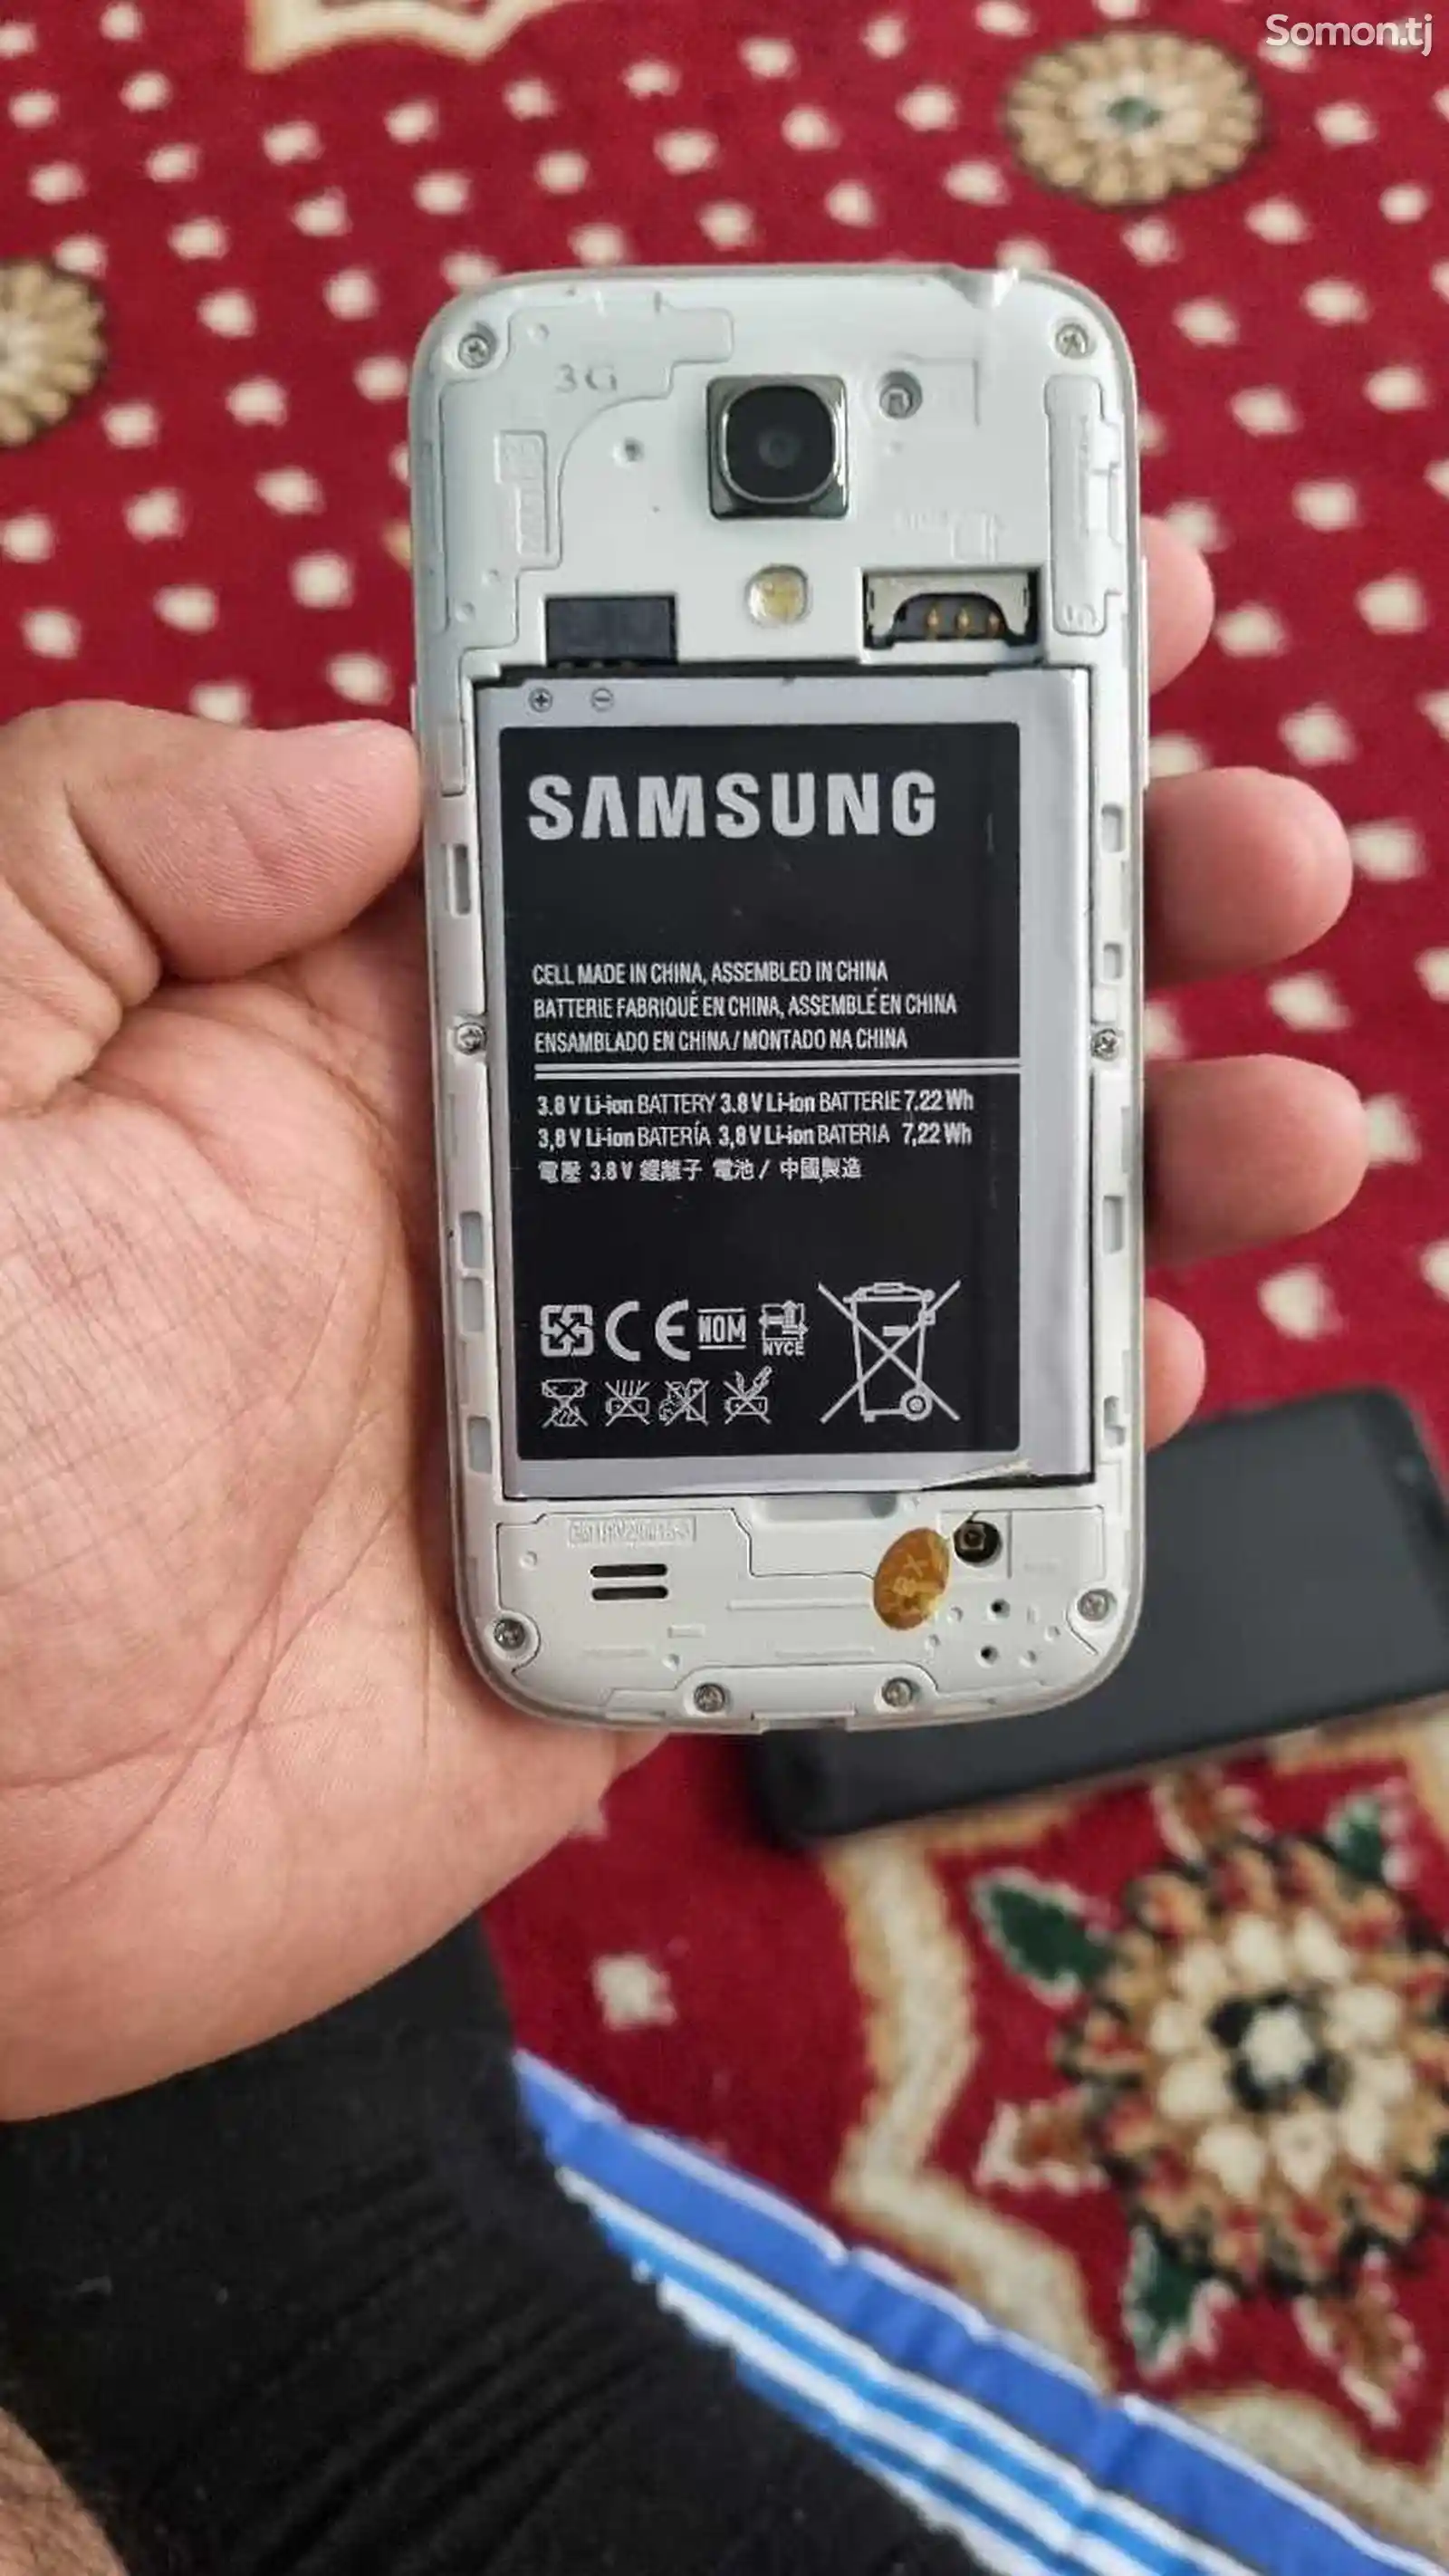 Samsung Galaxy S4 mini-5